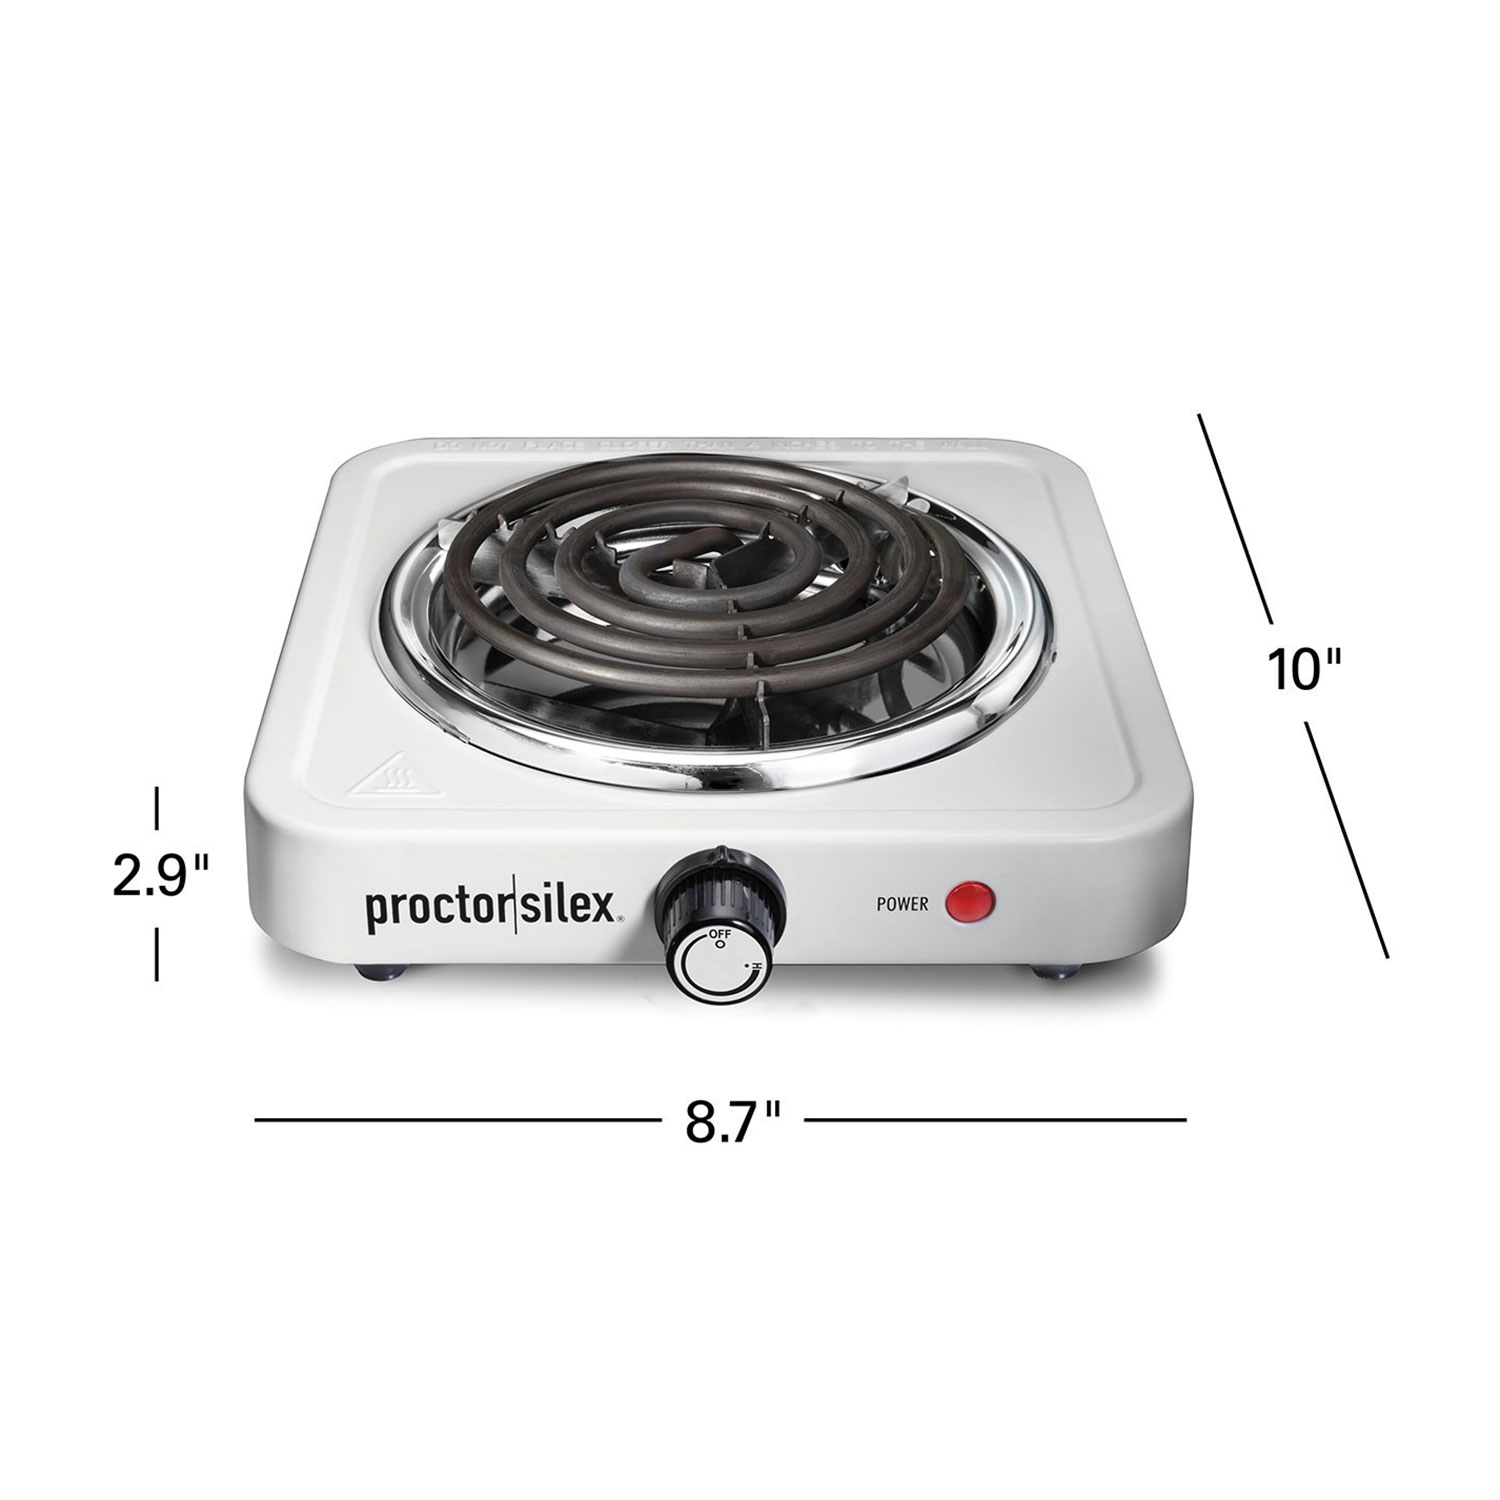 Hot stove tea maker small heating stove small electric stove mini